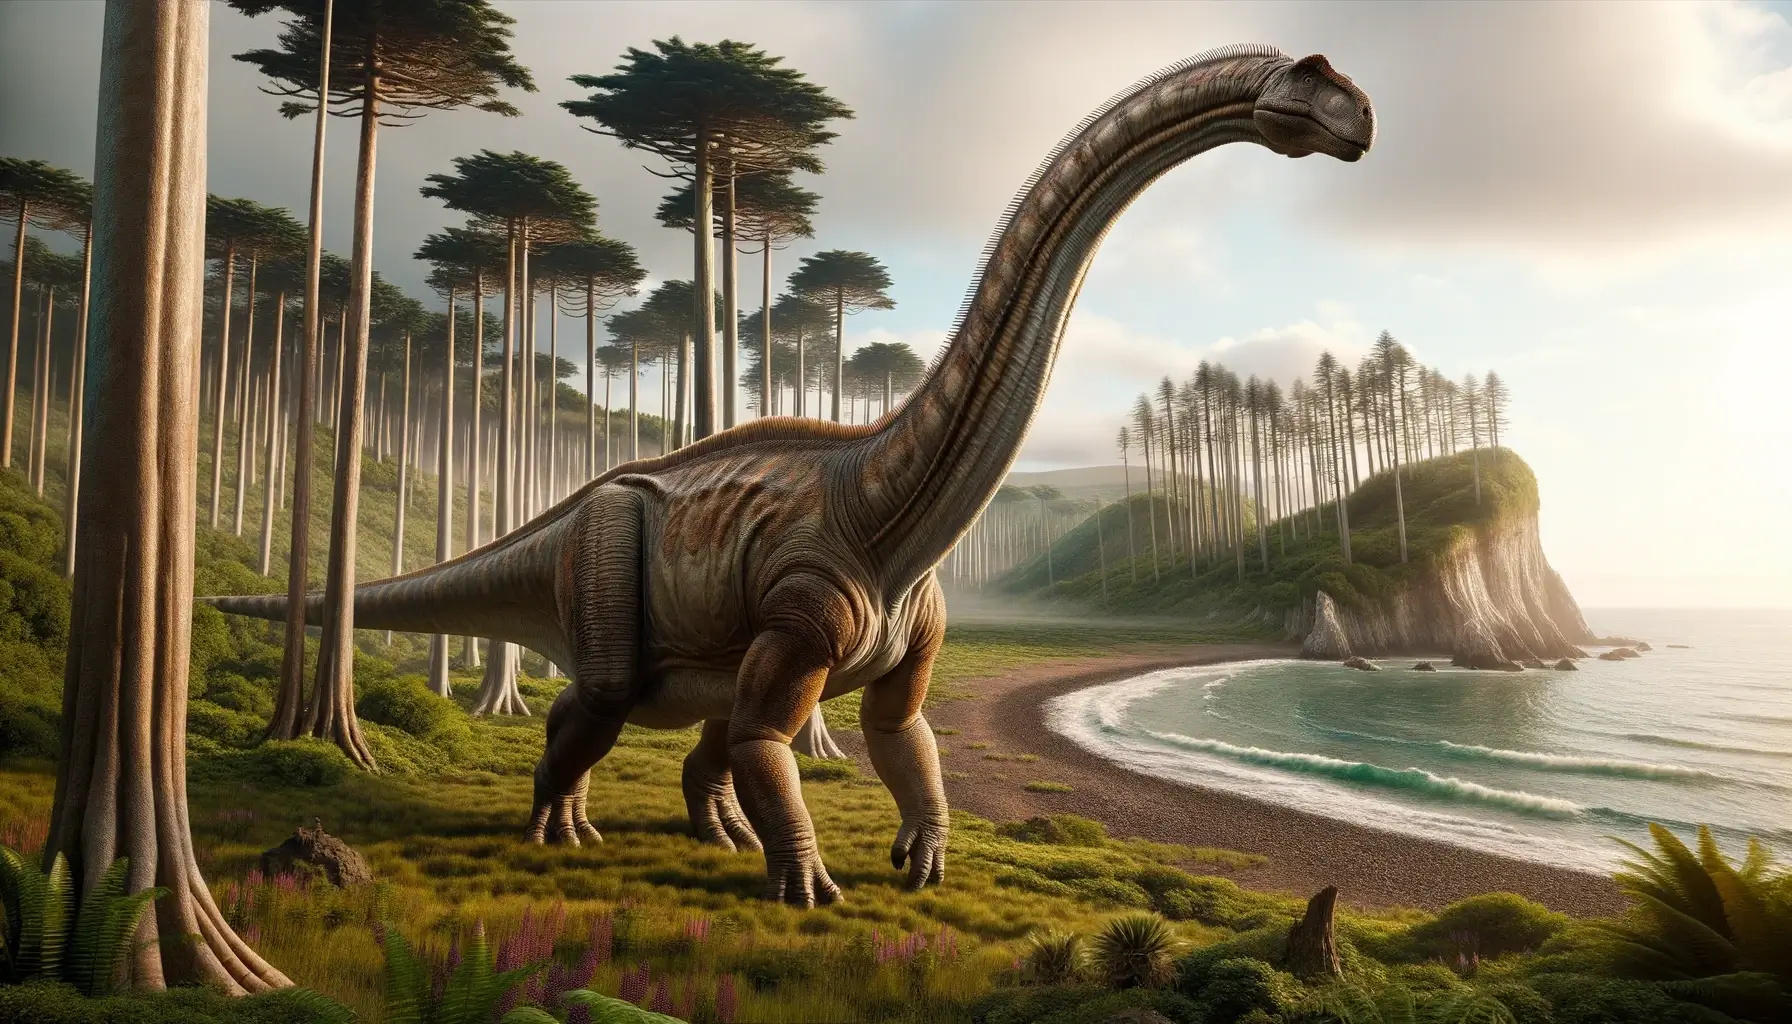 Alamosaurus in lush coastal plains with tall trees.